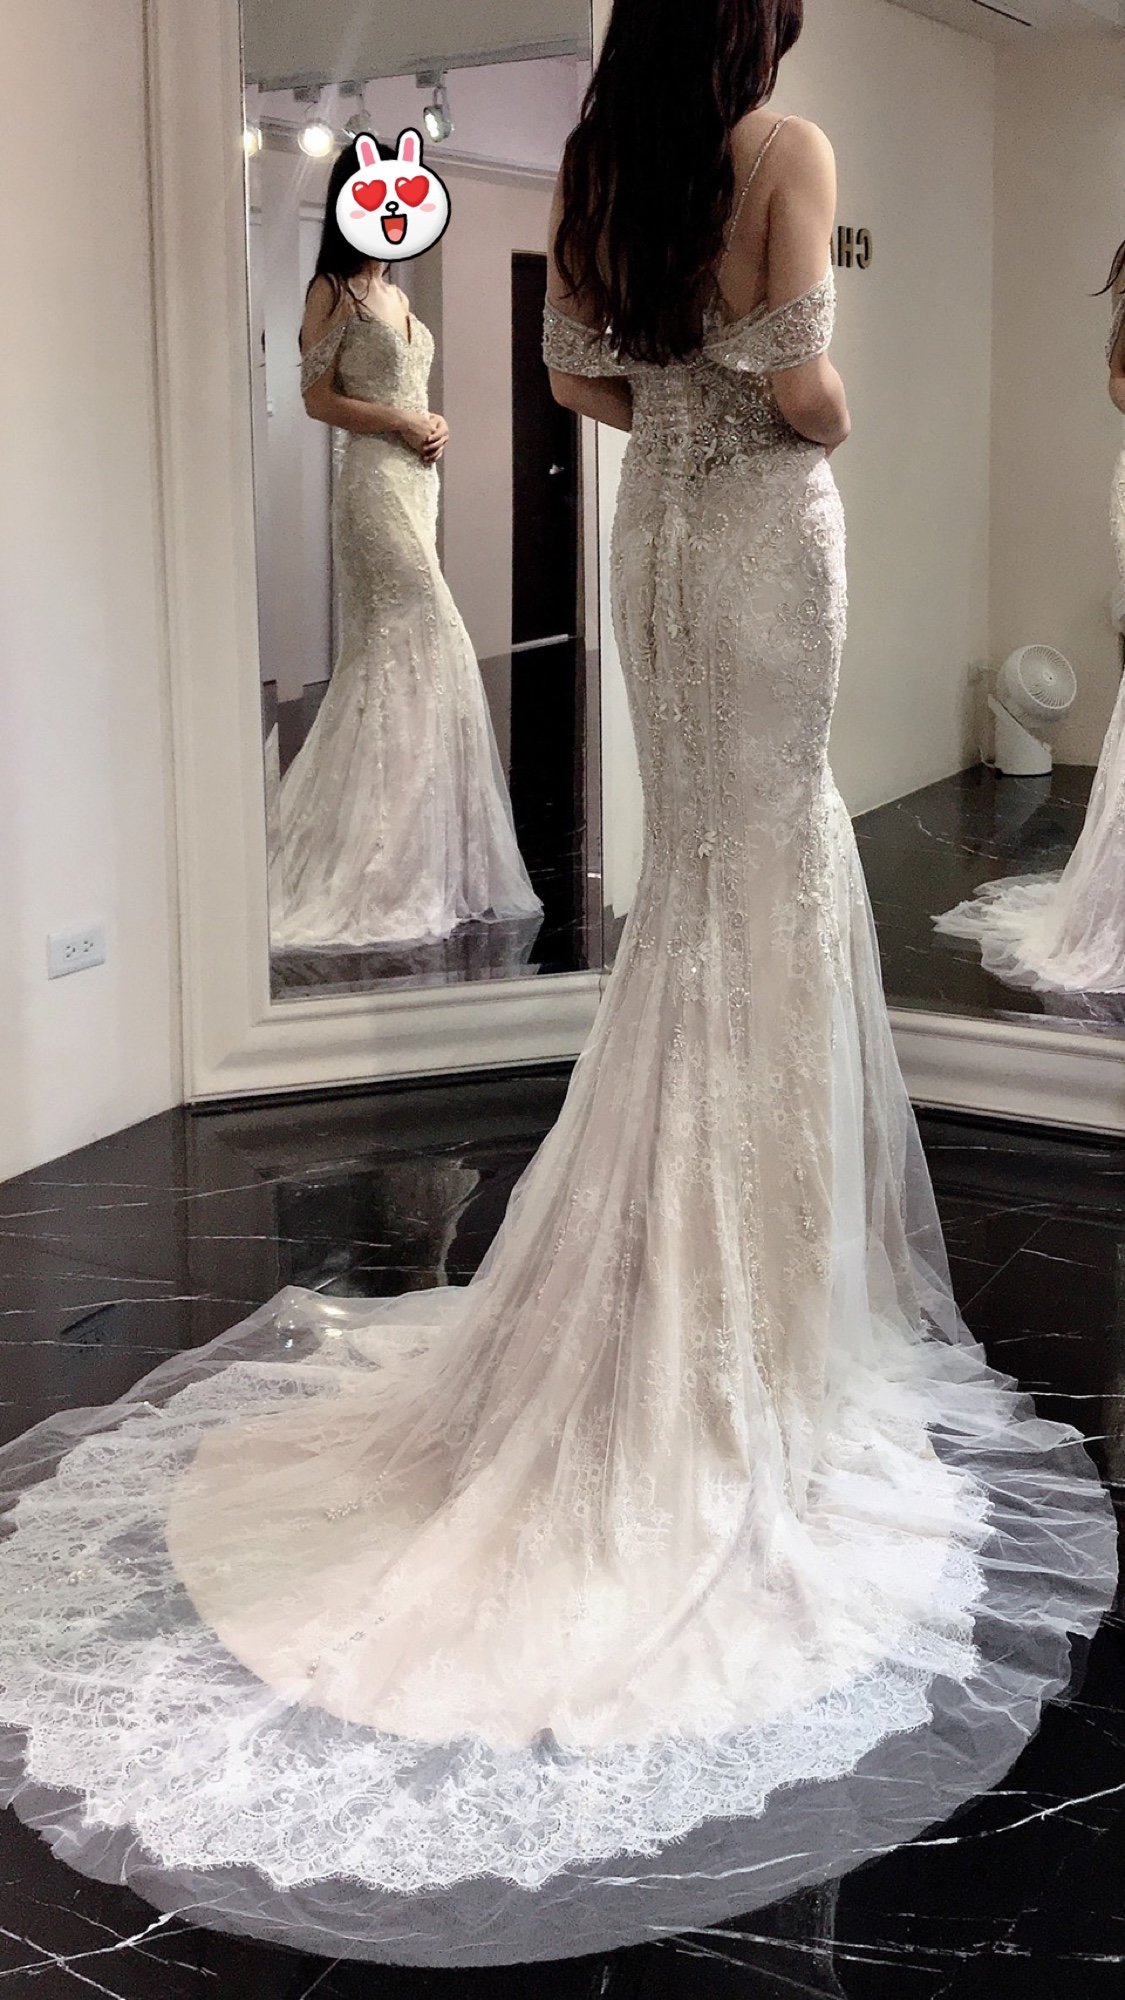 Charming Lace 迷人的婚紗-婚禮廠商評價